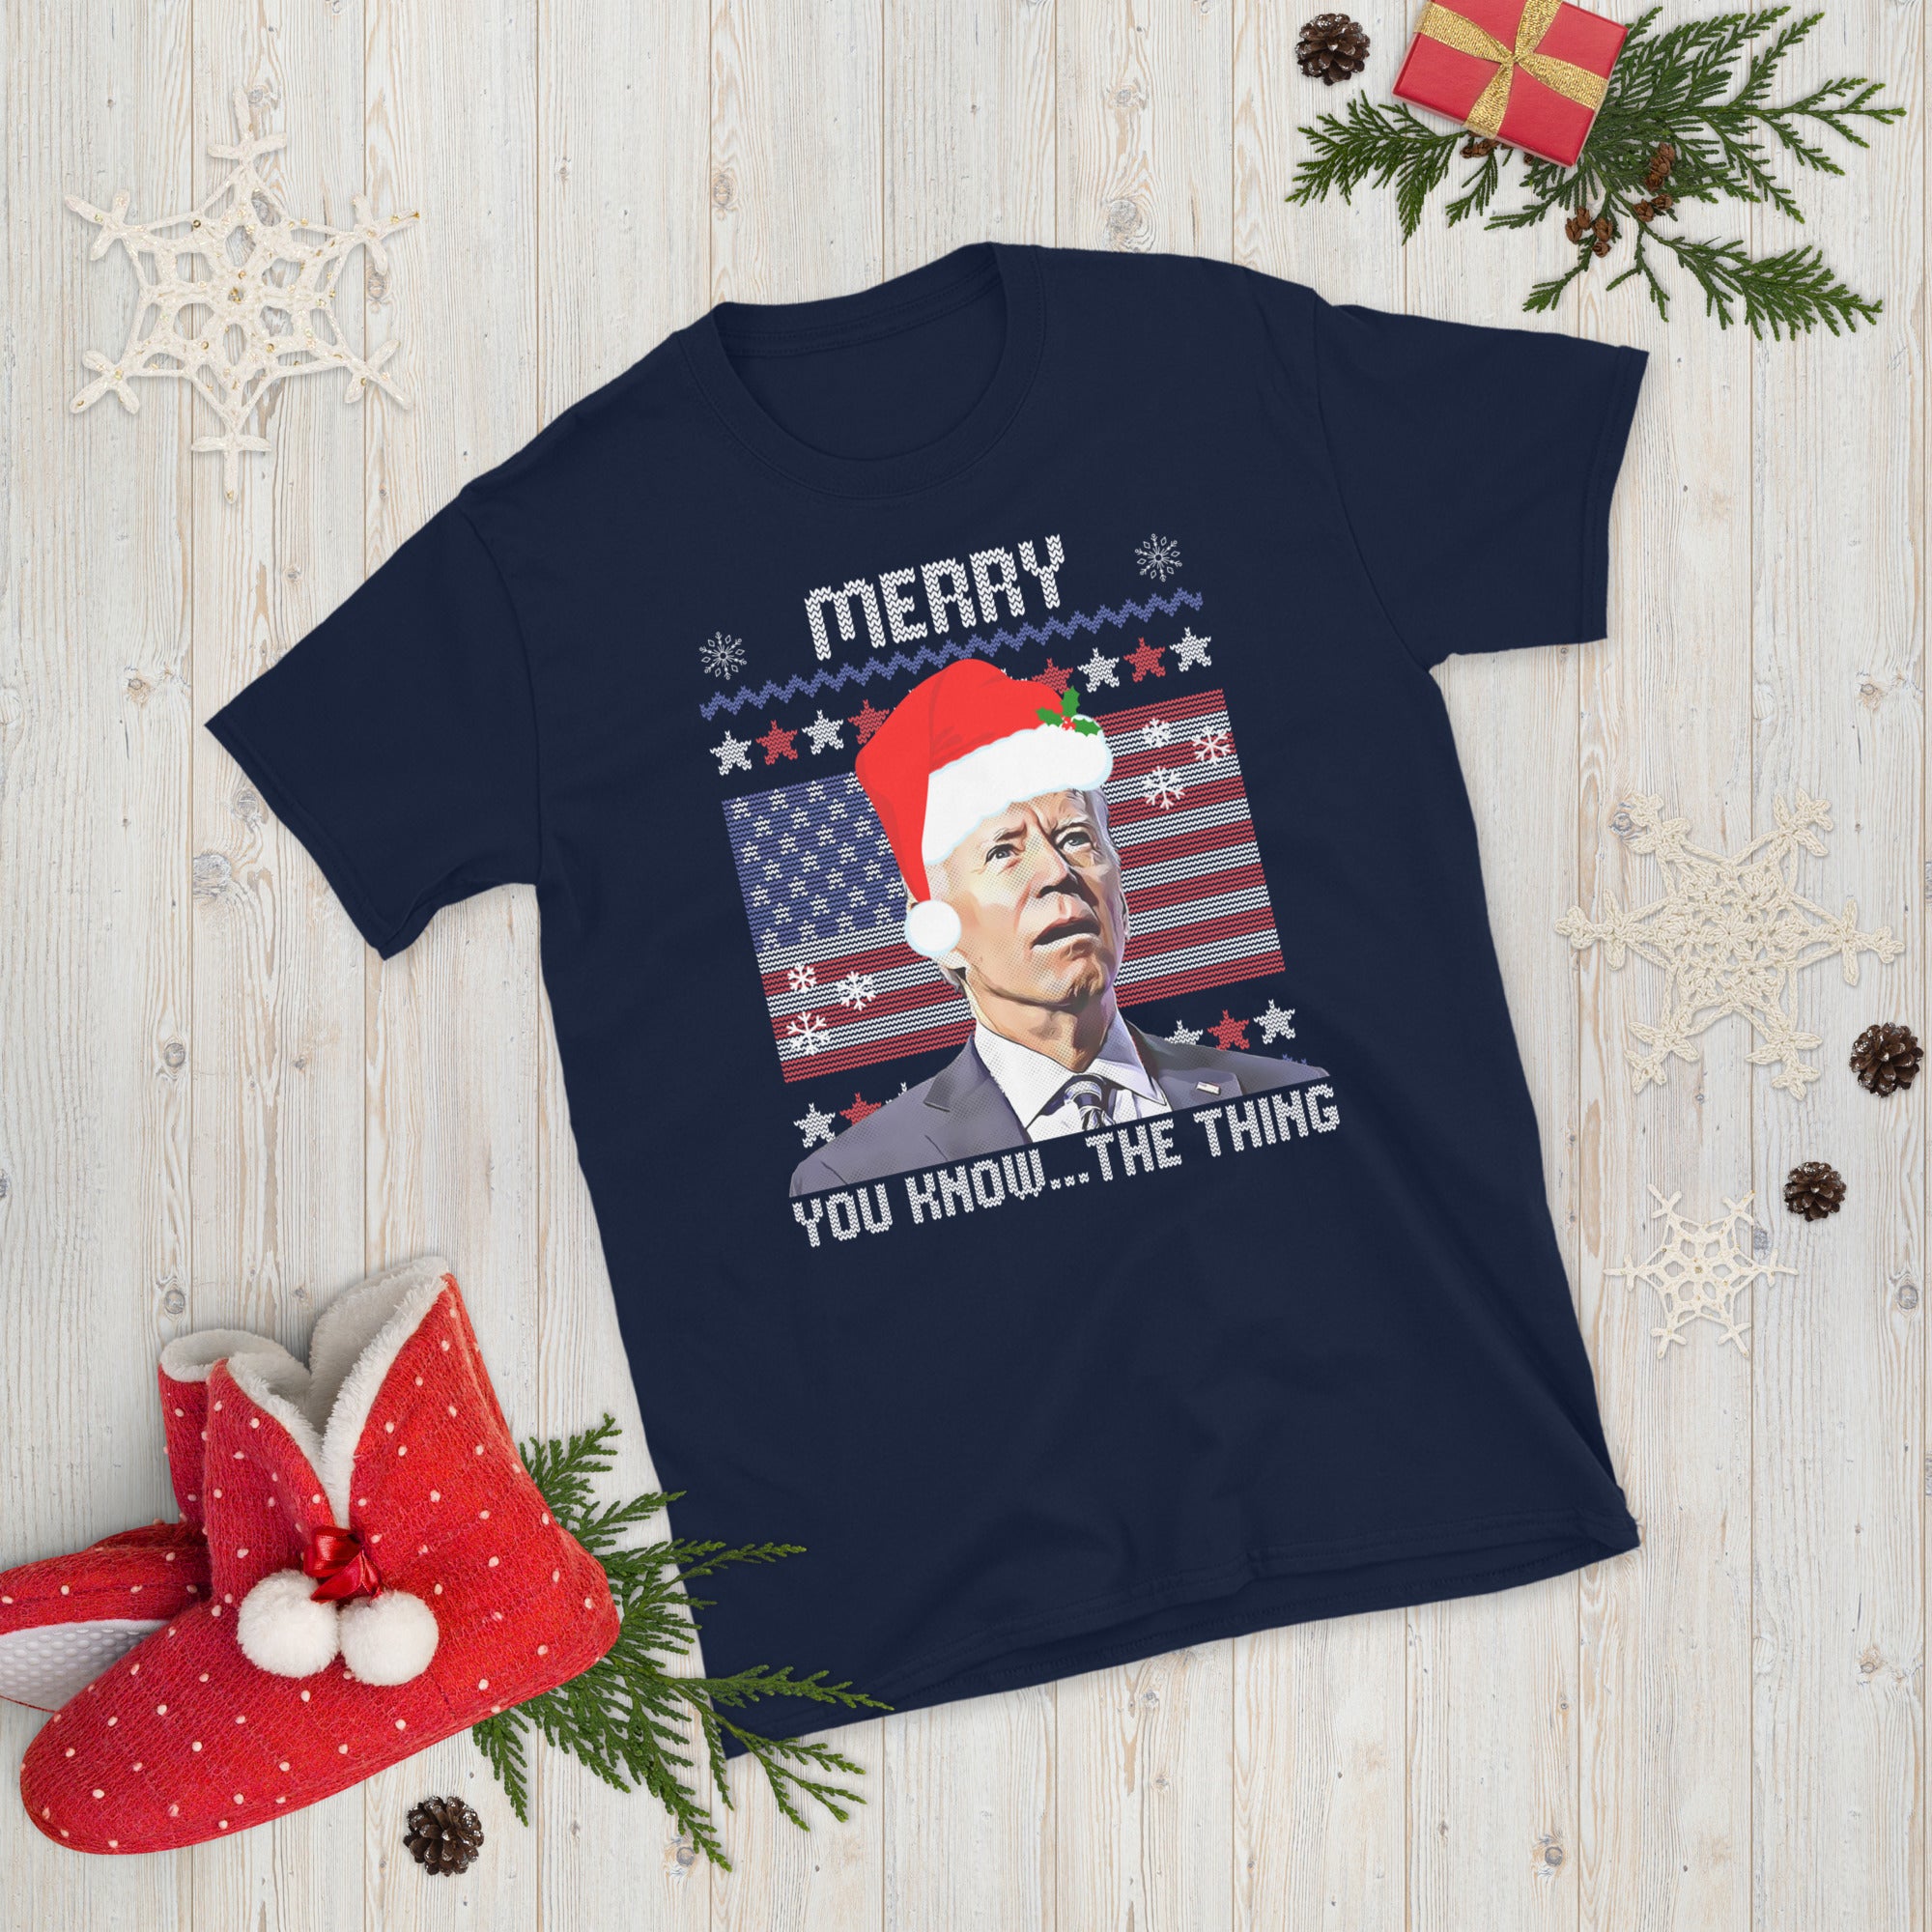 Merry You Know The Thing, Christmas Biden Shirt, Funny Confused Joe Biden Xmas Tshirt, Santa Joe Biden T Shirt, Republican Gifts, FJB Shirt